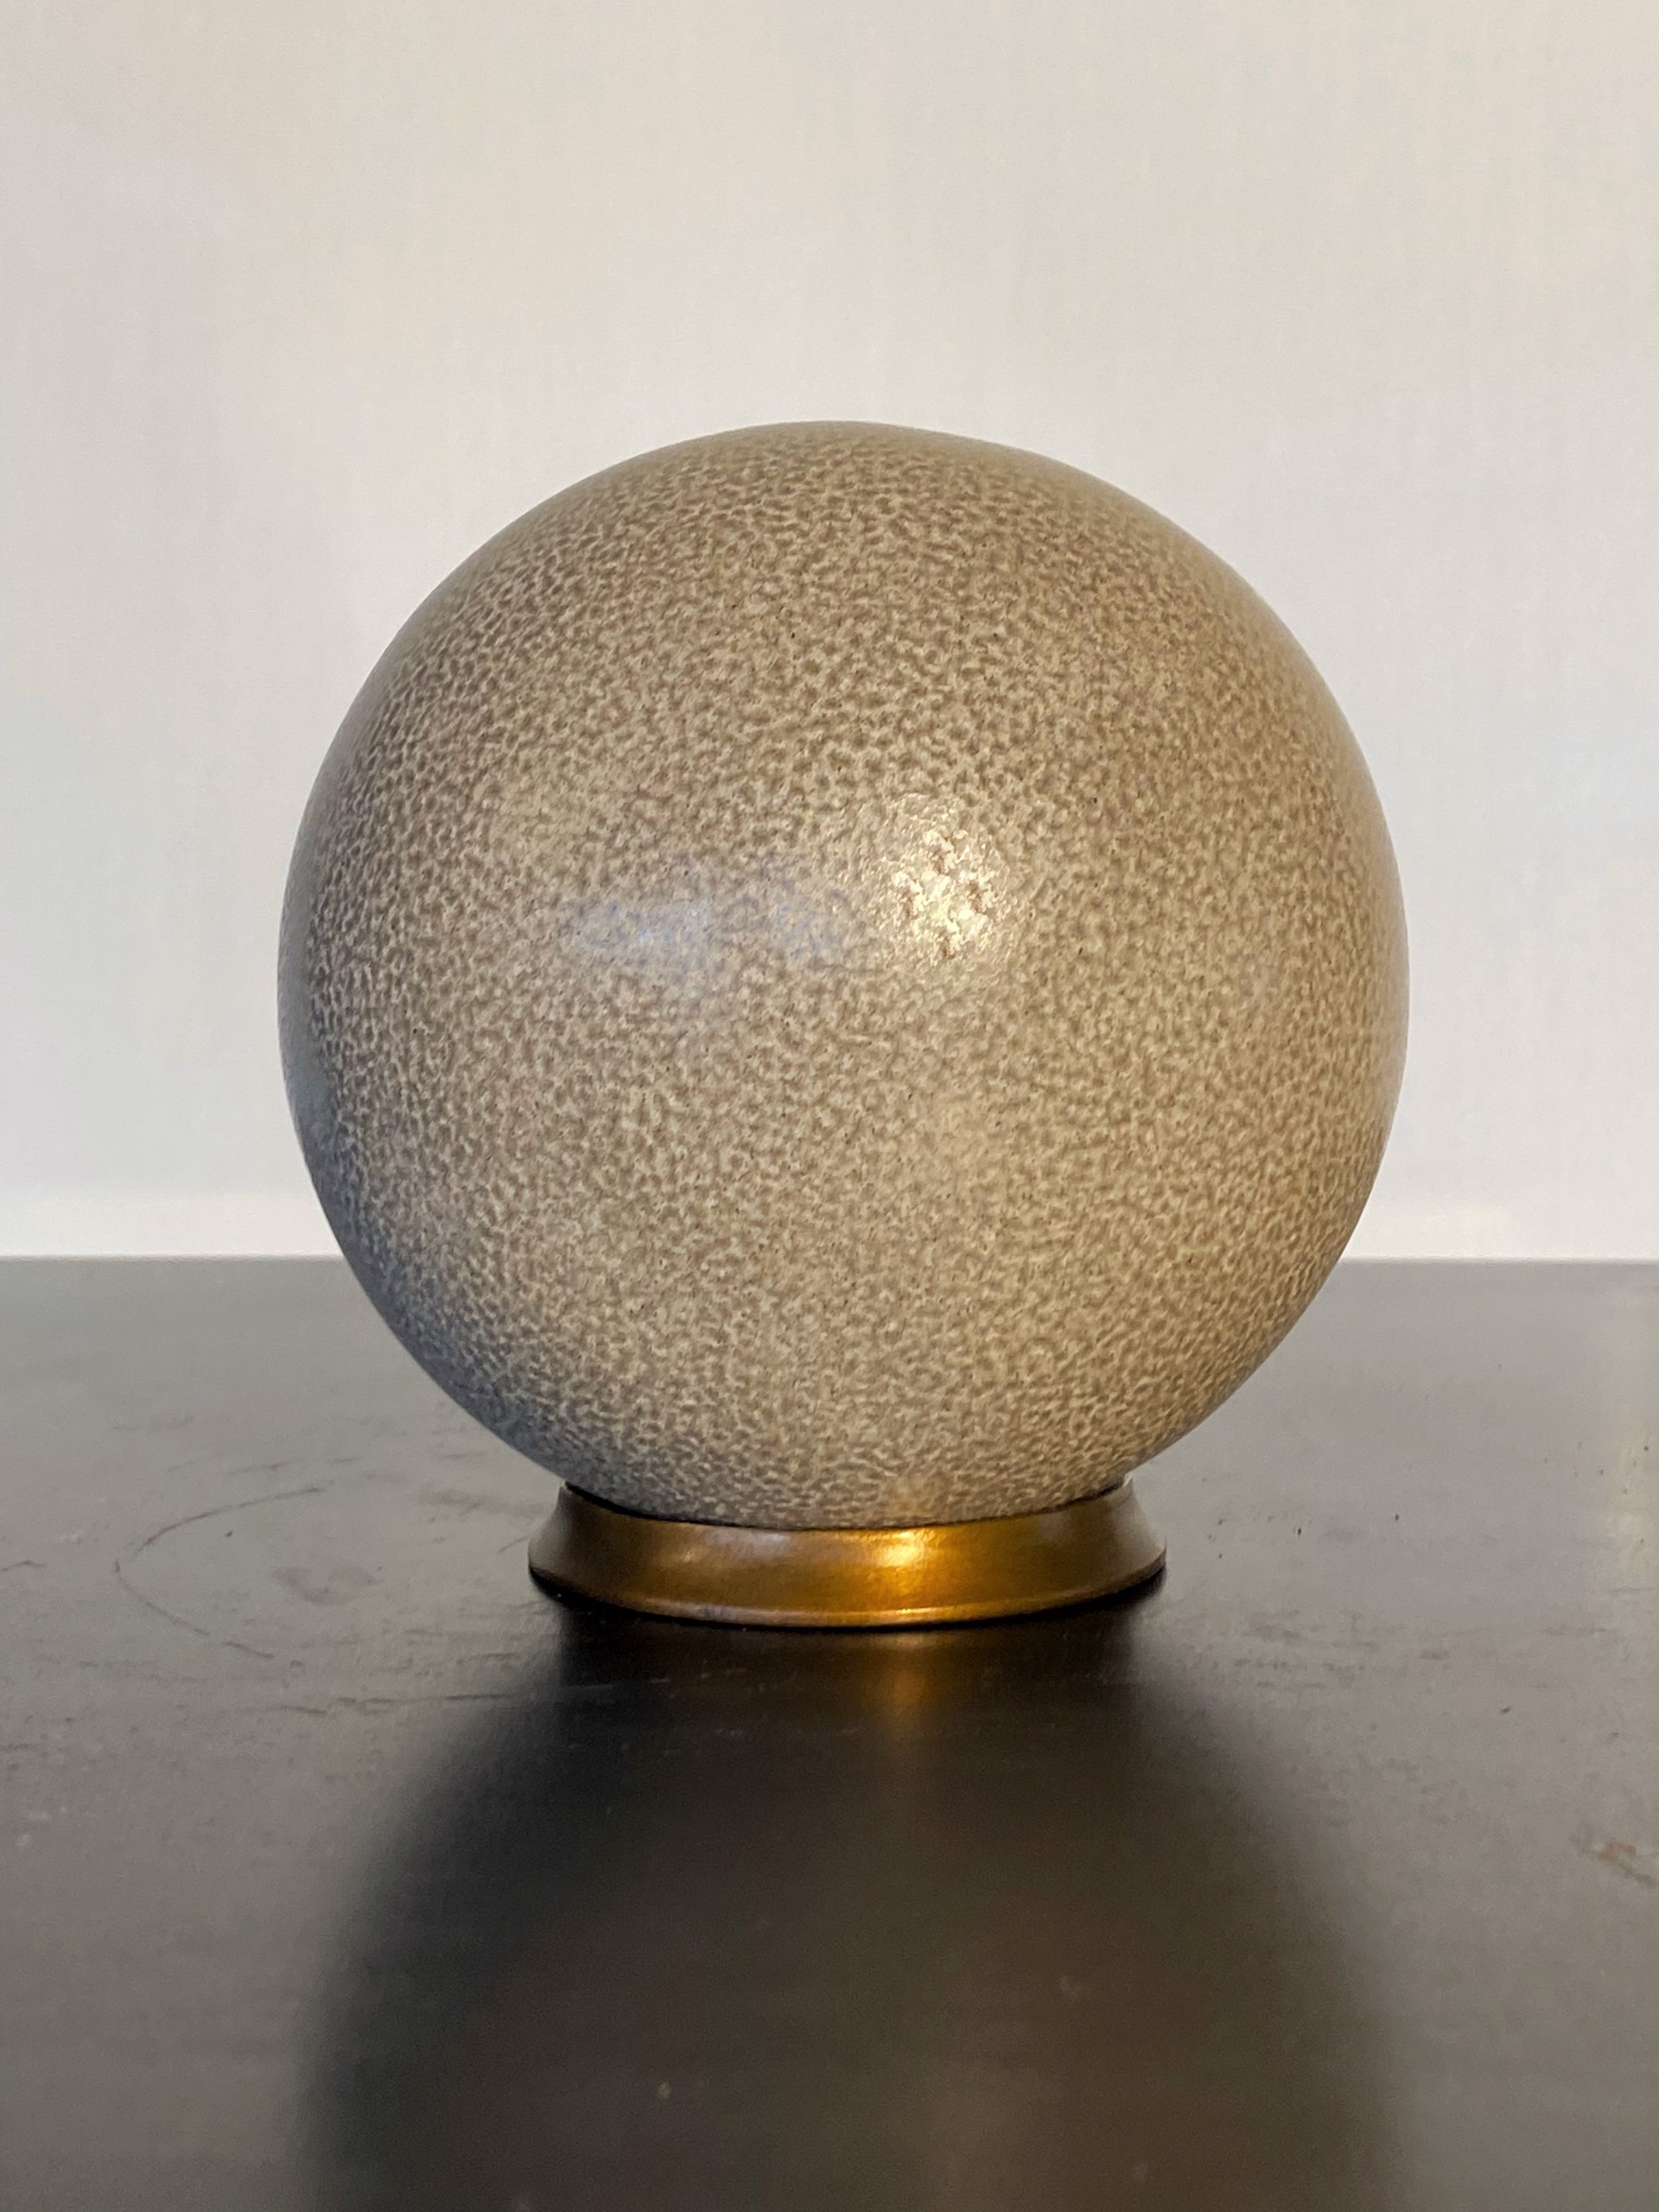 Earth Sphere #6 by Bruce Gardner